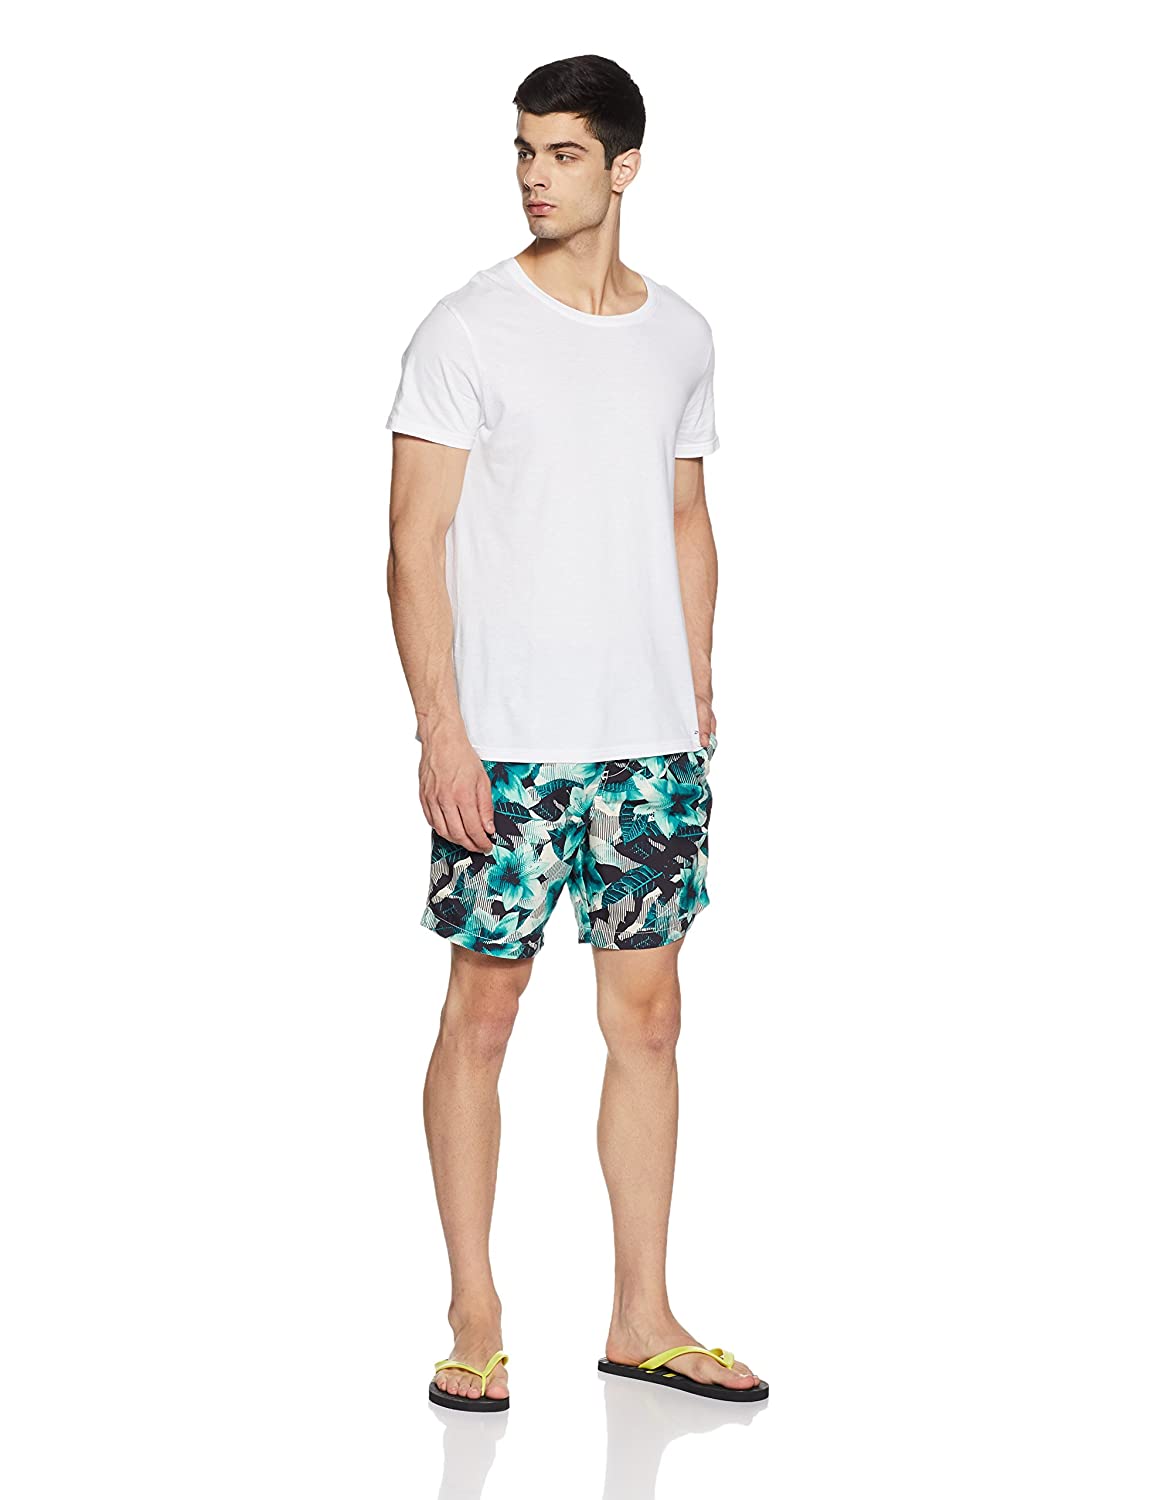 Speedo Male Swimwear Aquapack 18" Watershort - Best Price online Prokicksports.com